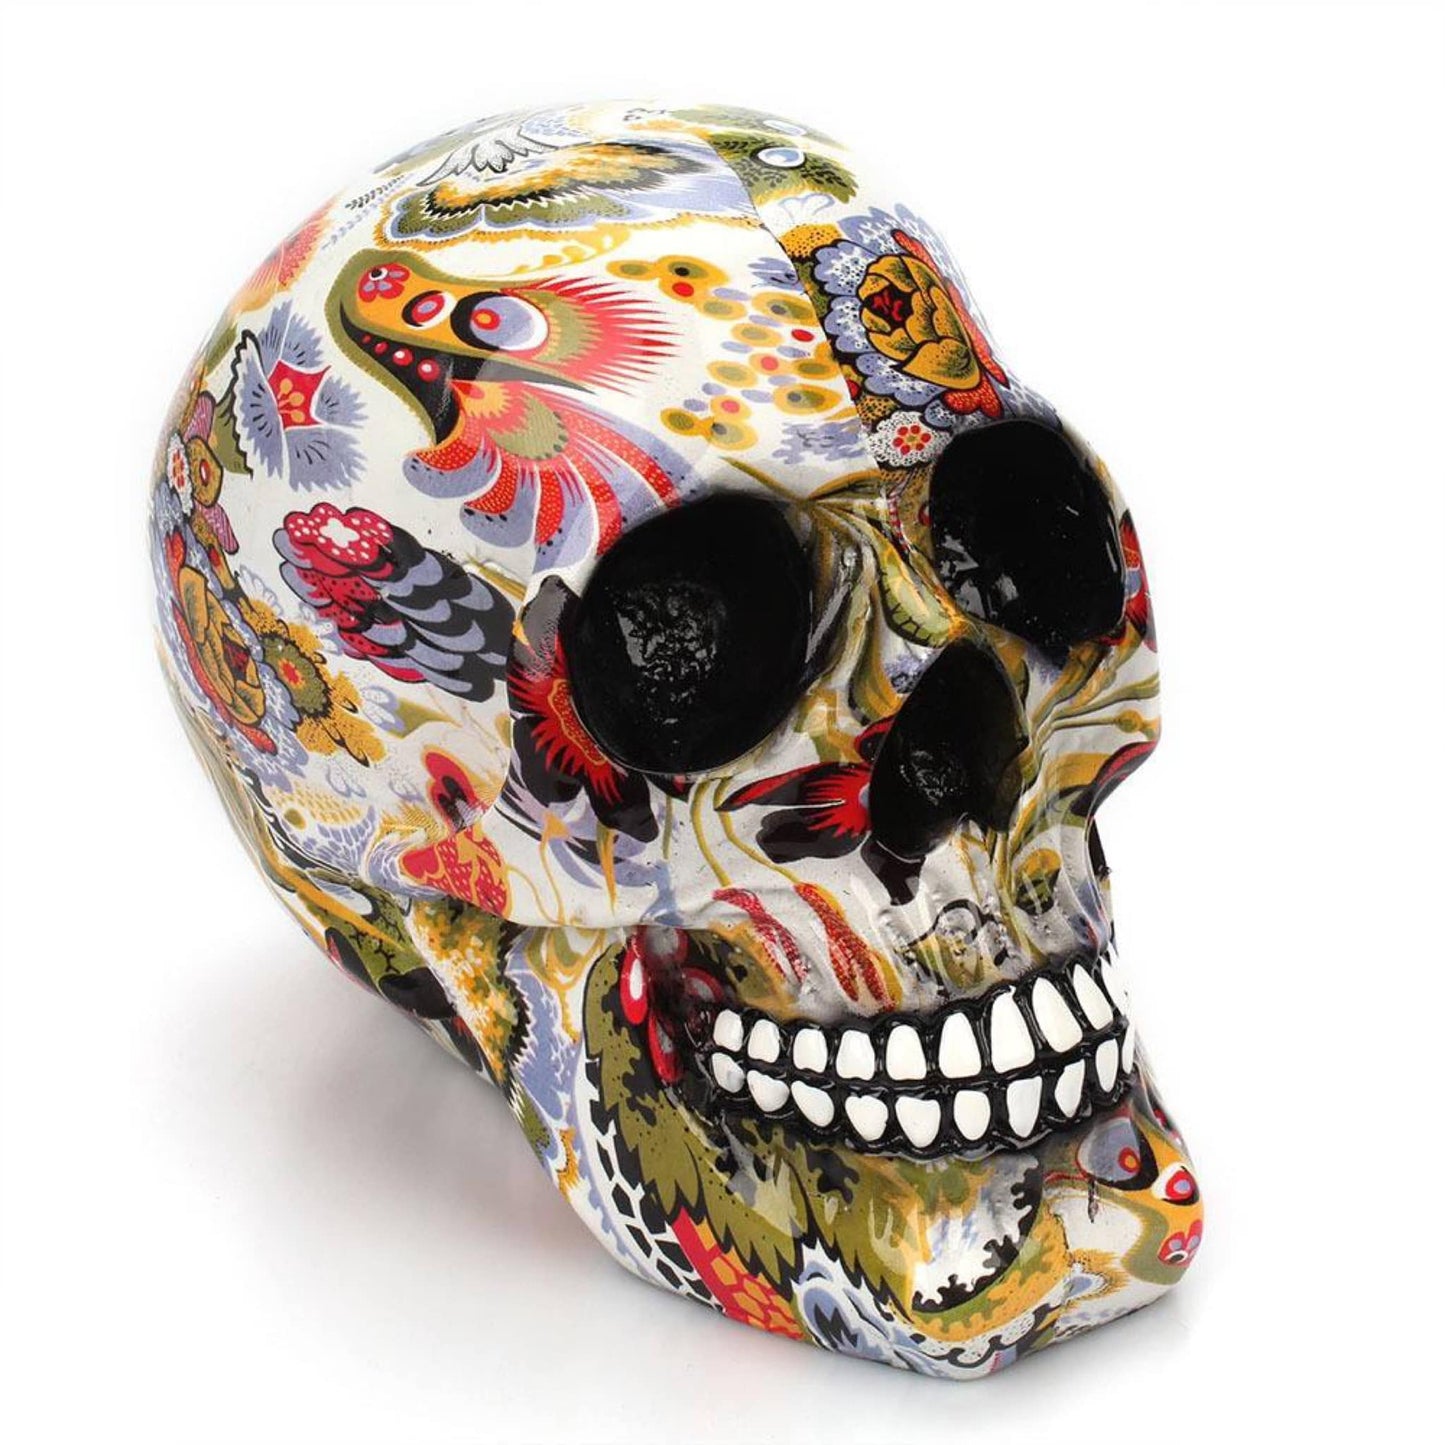 Skull desktop decor